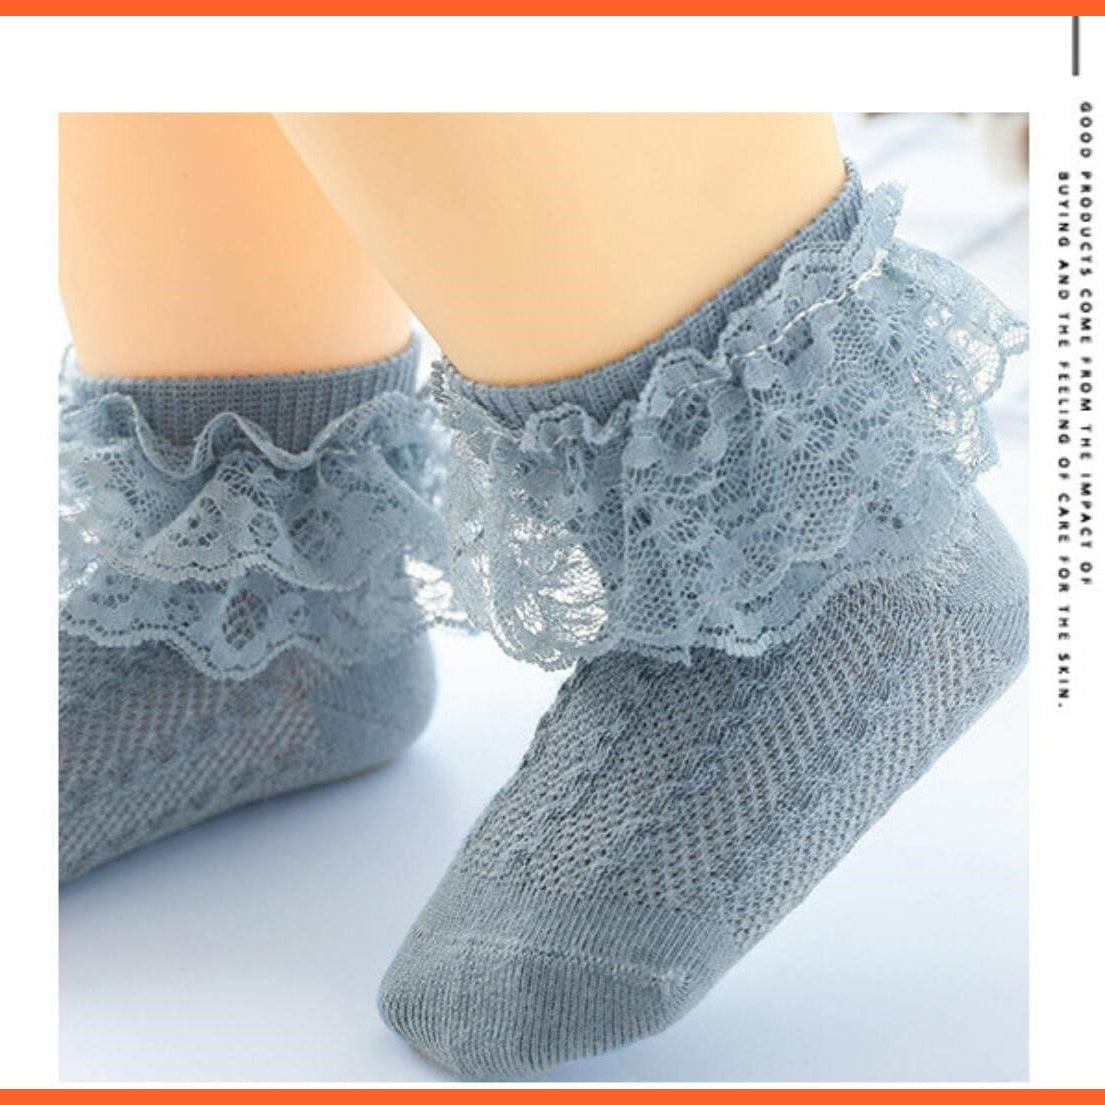 whatagift.com.au kids socks Infant Newborn Toddler Lace Ruffled Frilly Warm Lace Tutu Solid Ankle Baby Socks